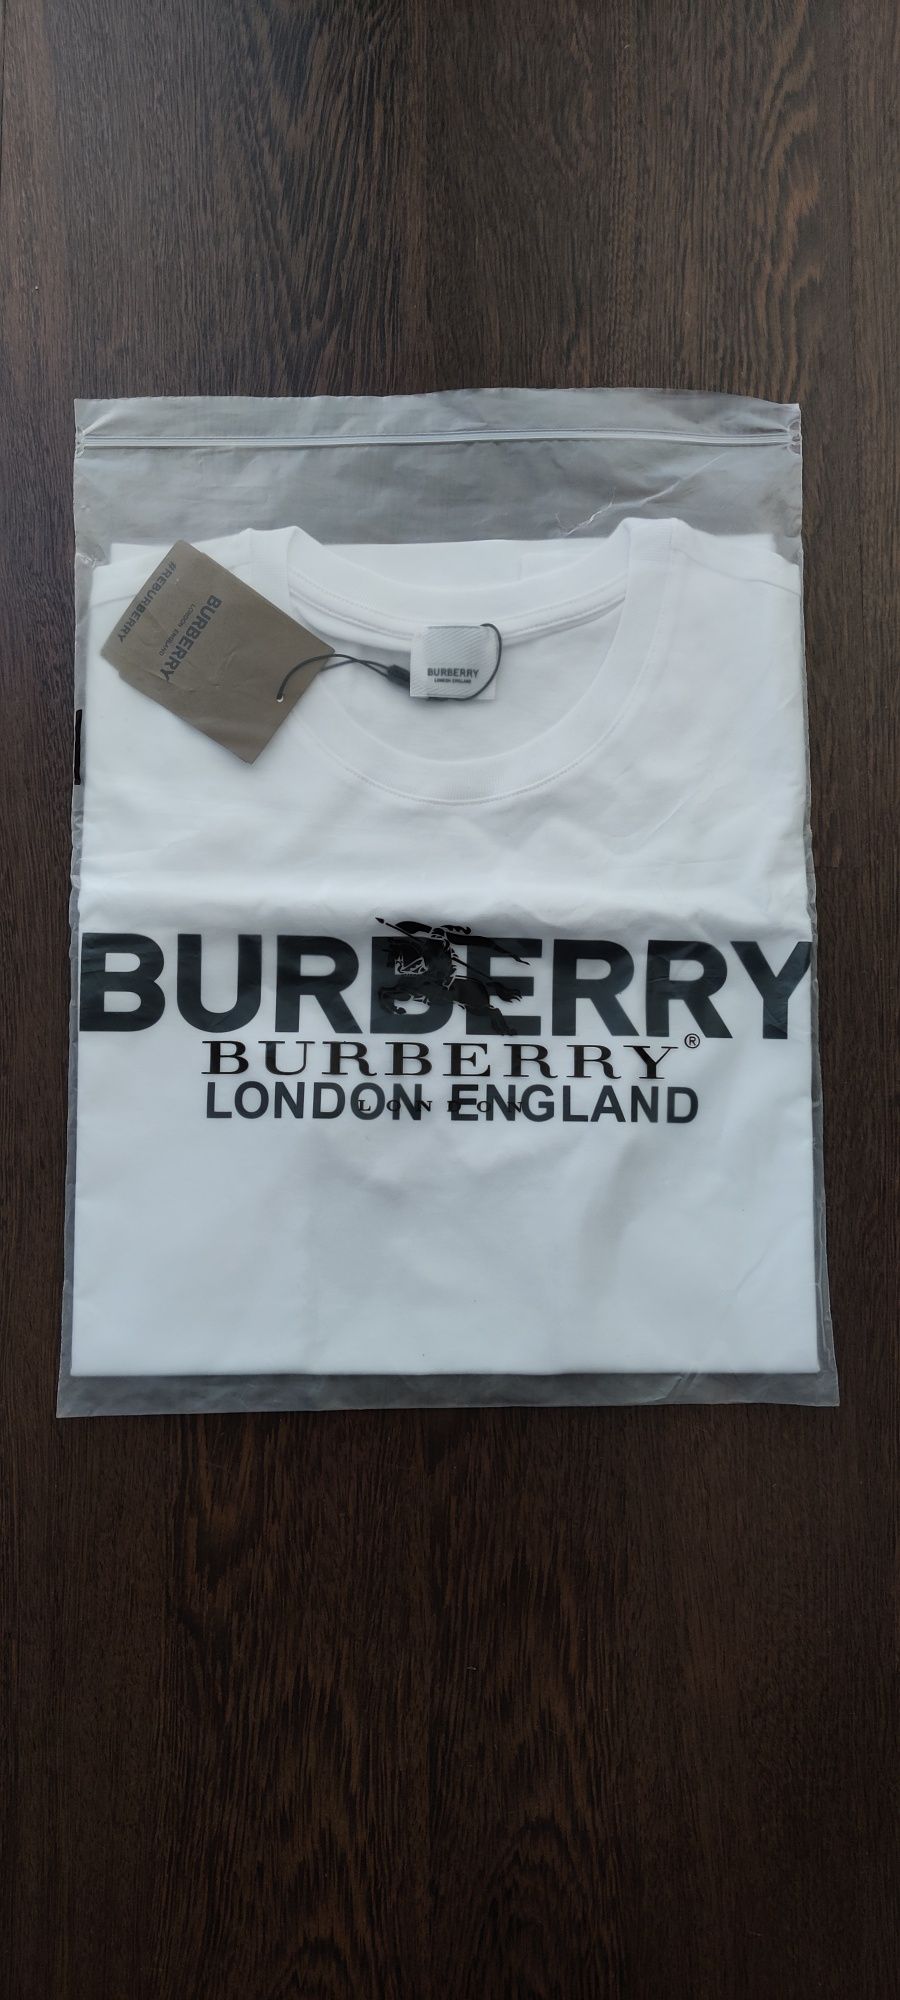 T-shirt Burberry branca